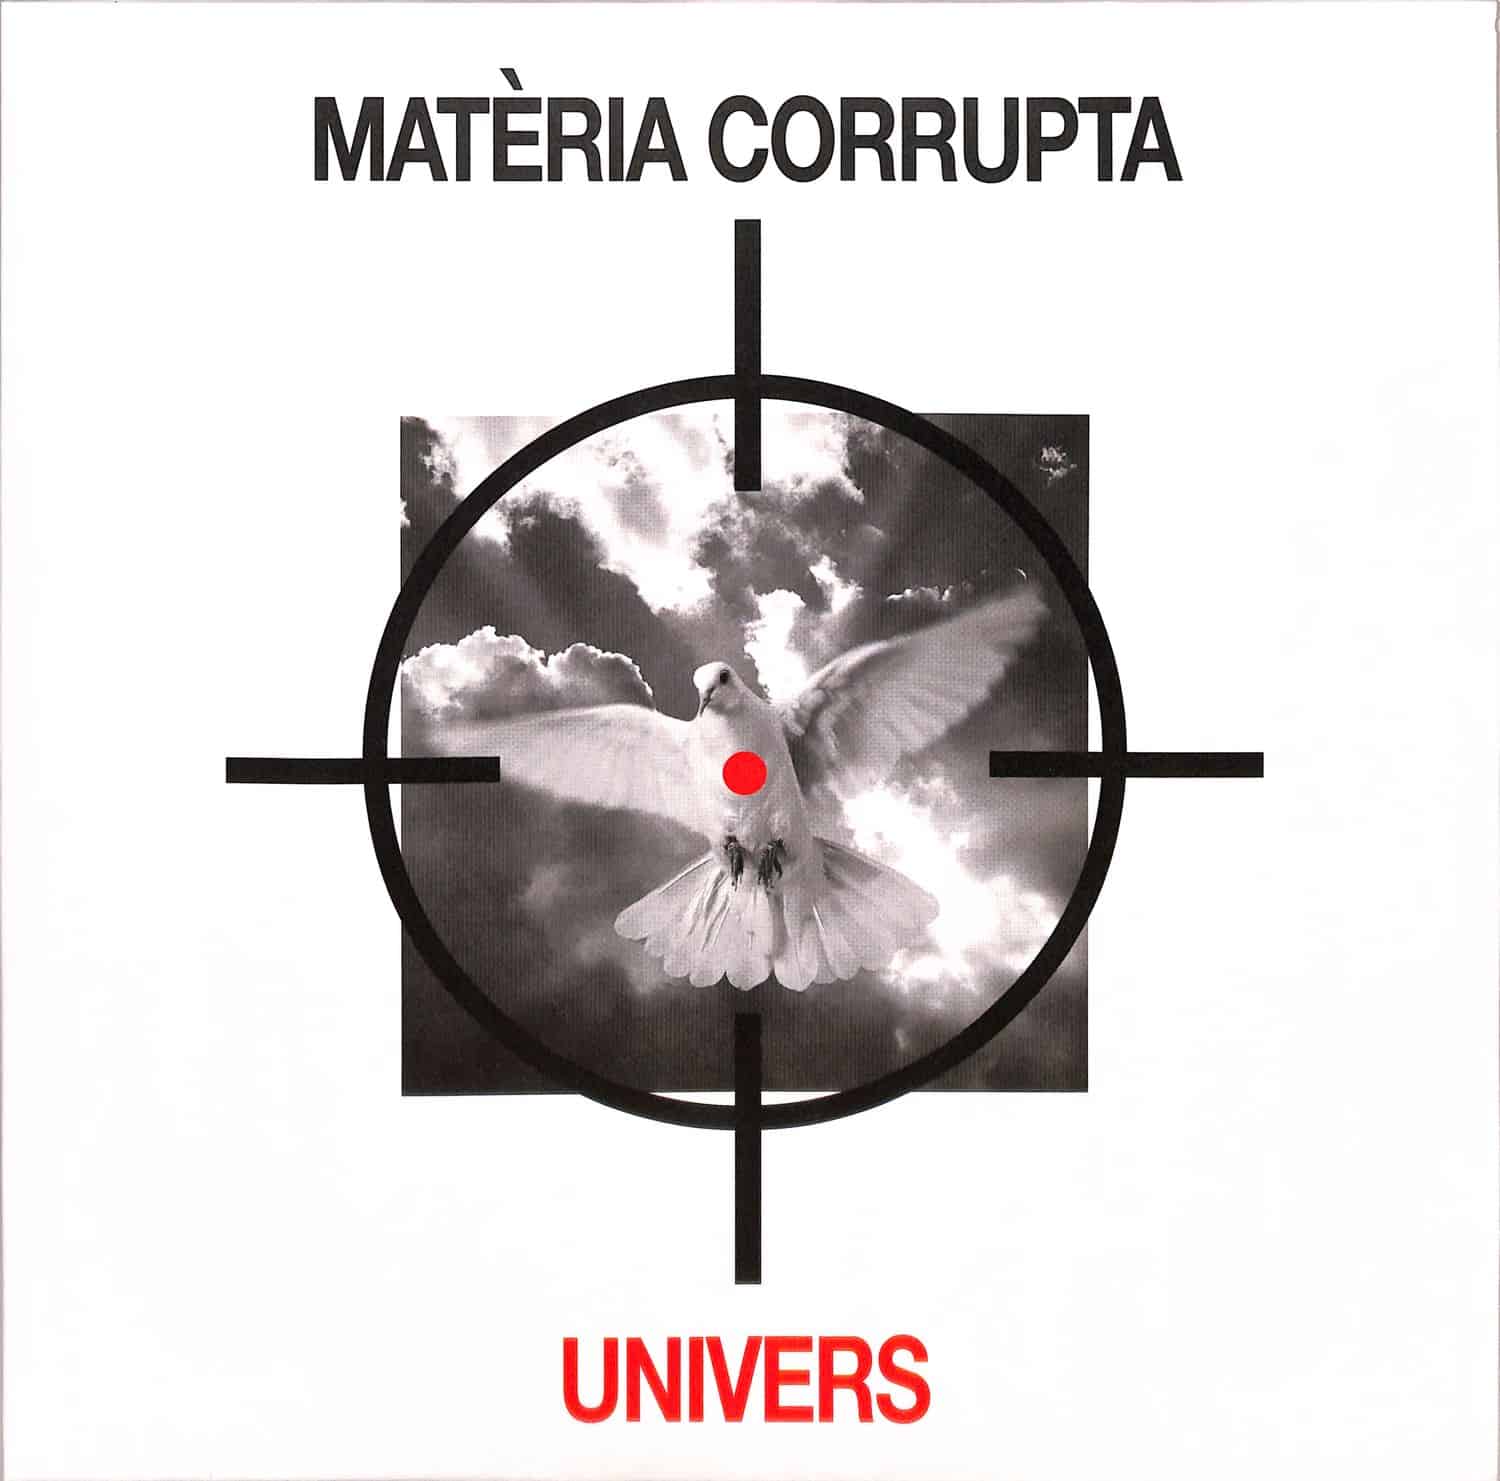 Universe - MATERIA CORRUPTA